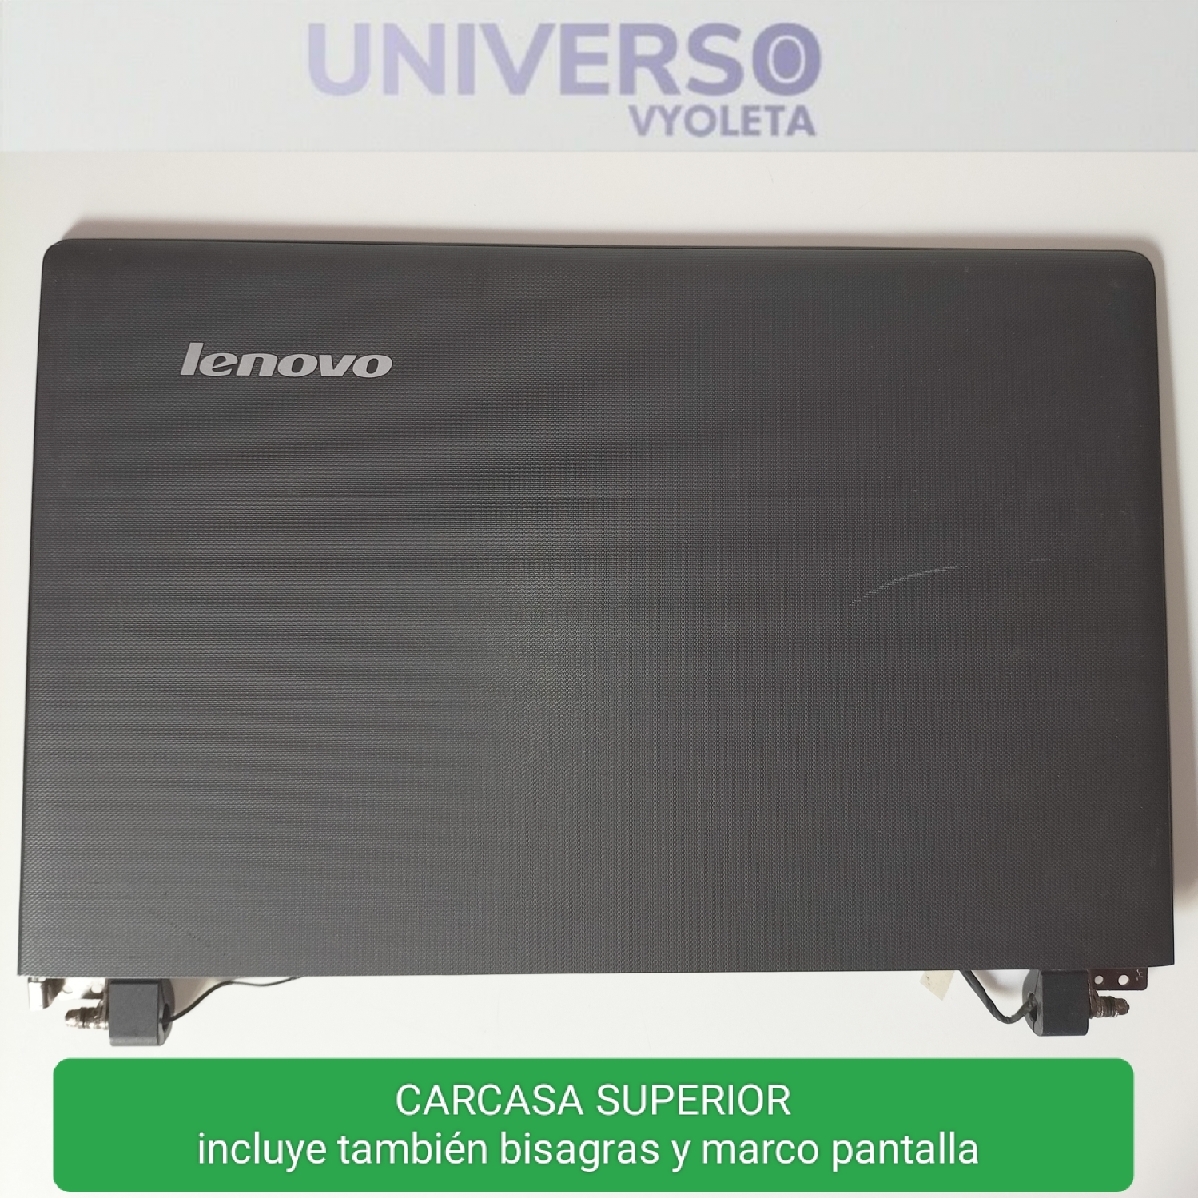 Carcasa superior Top cover Lenovo B50-10 80QR